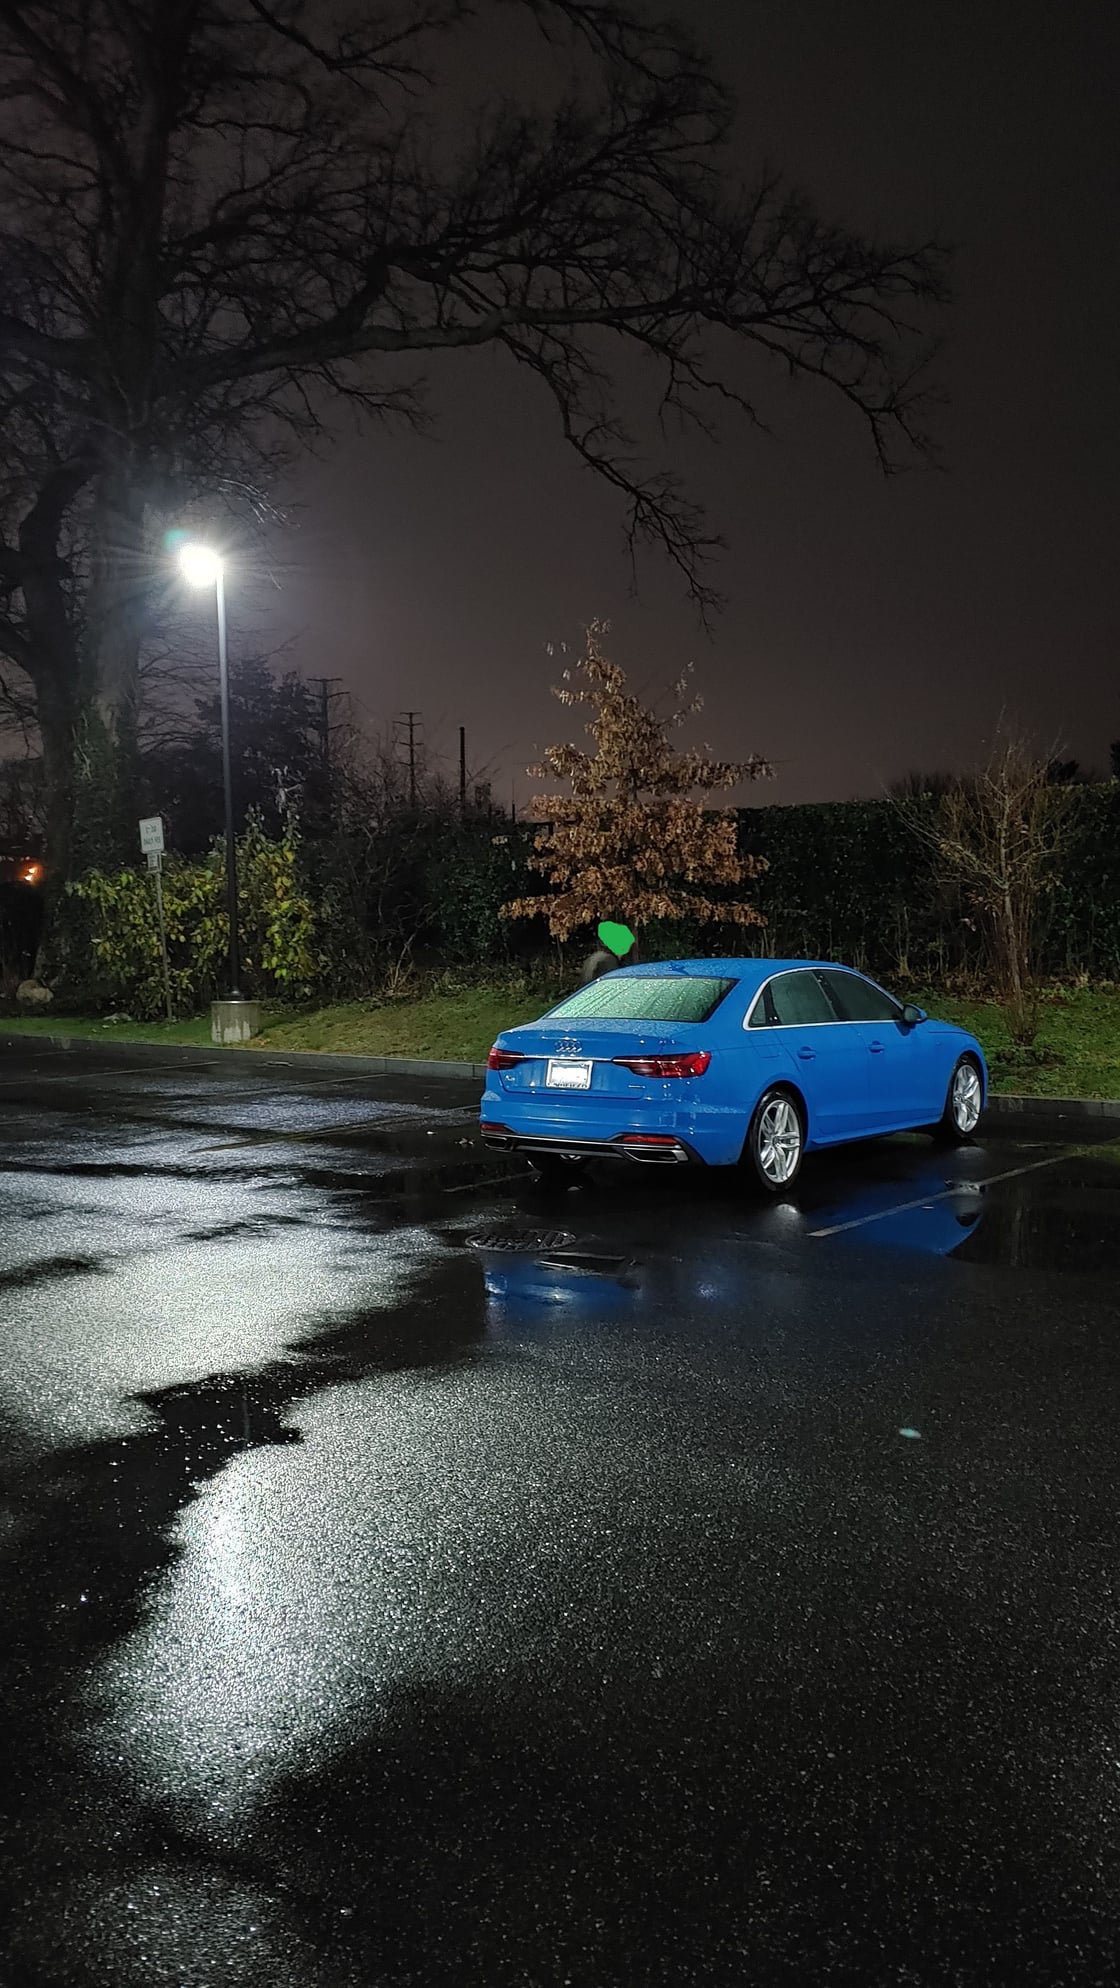 2020 Audi A4 - Mint 2020 A4 Low Miles S-Line Premium 45 Turbo Blue - Used - VIN WAUDNAF49LN011344 - 7,350 Miles - 4 cyl - AWD - Automatic - Sedan - Blue - Stamford, CT 06902, United States